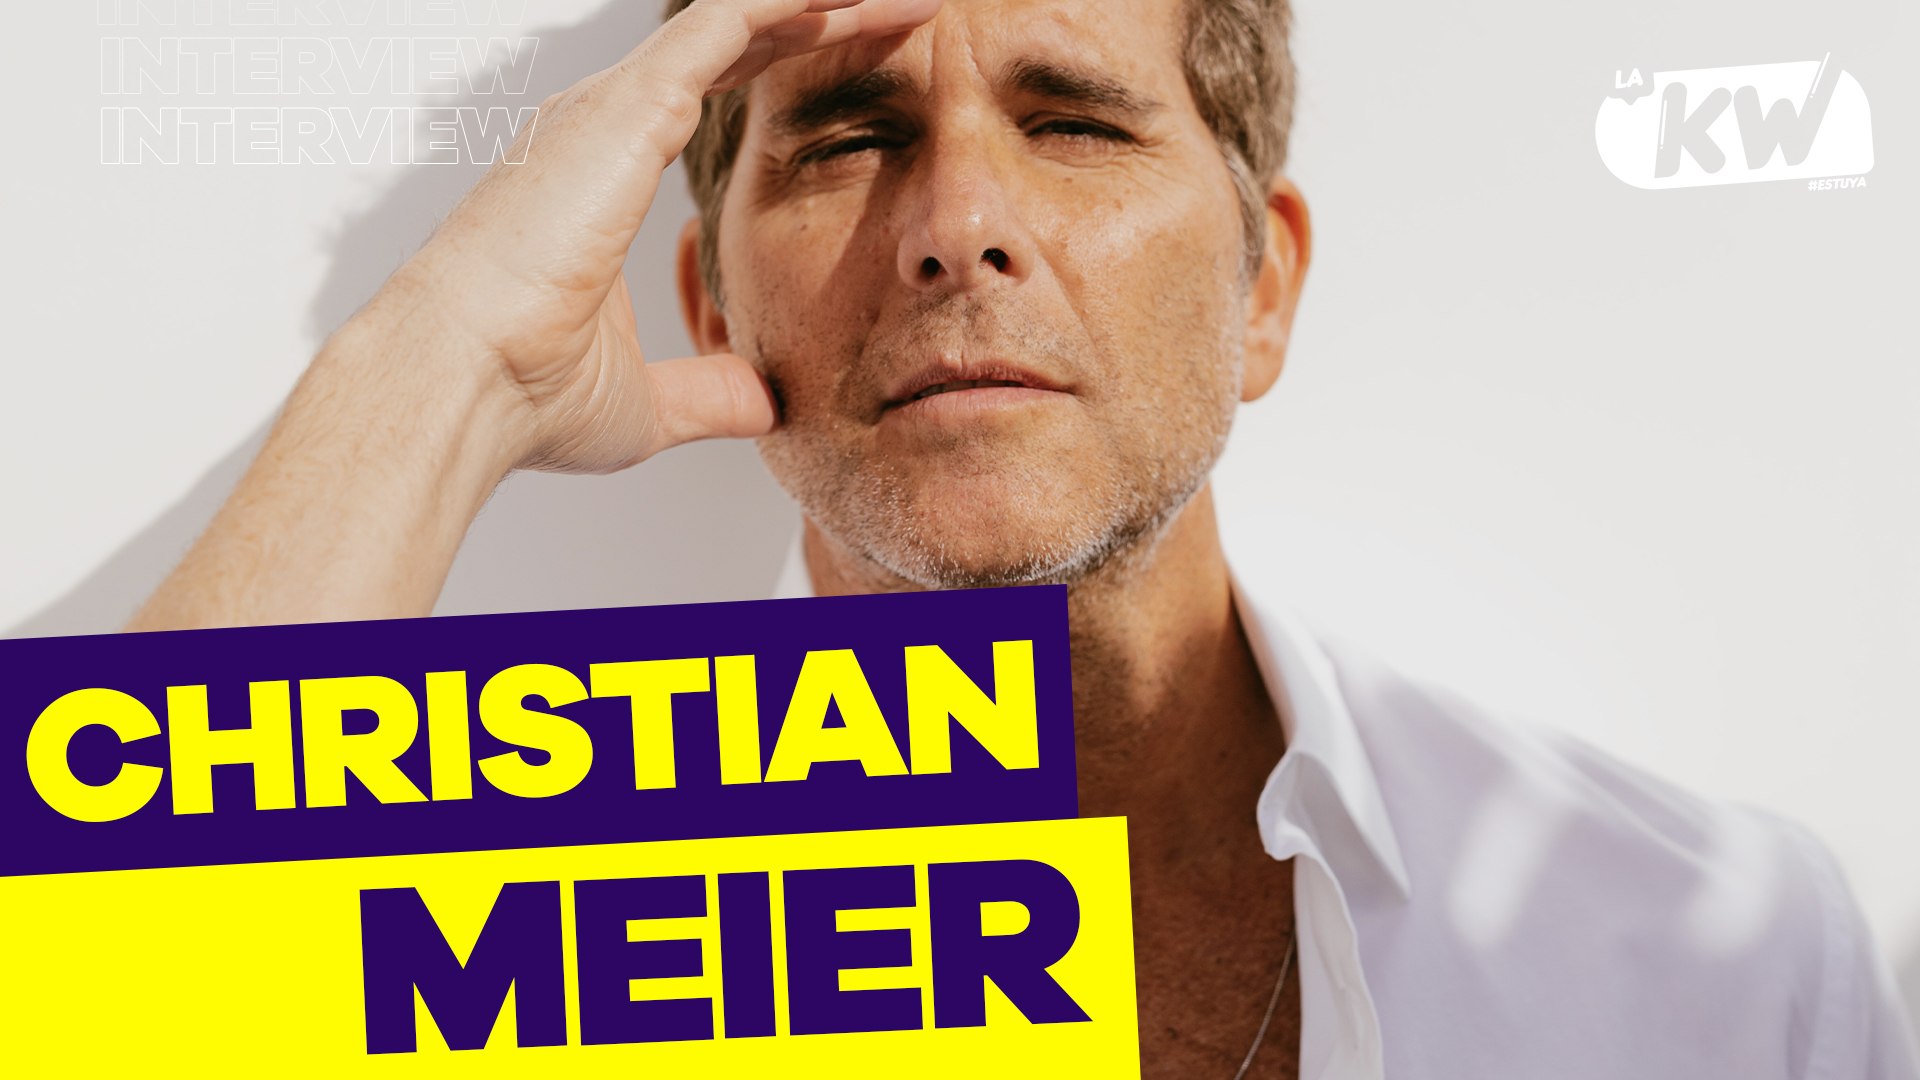 ⁣Christian Meier regresa a la música con su álbum “He Vuelto a Casa”